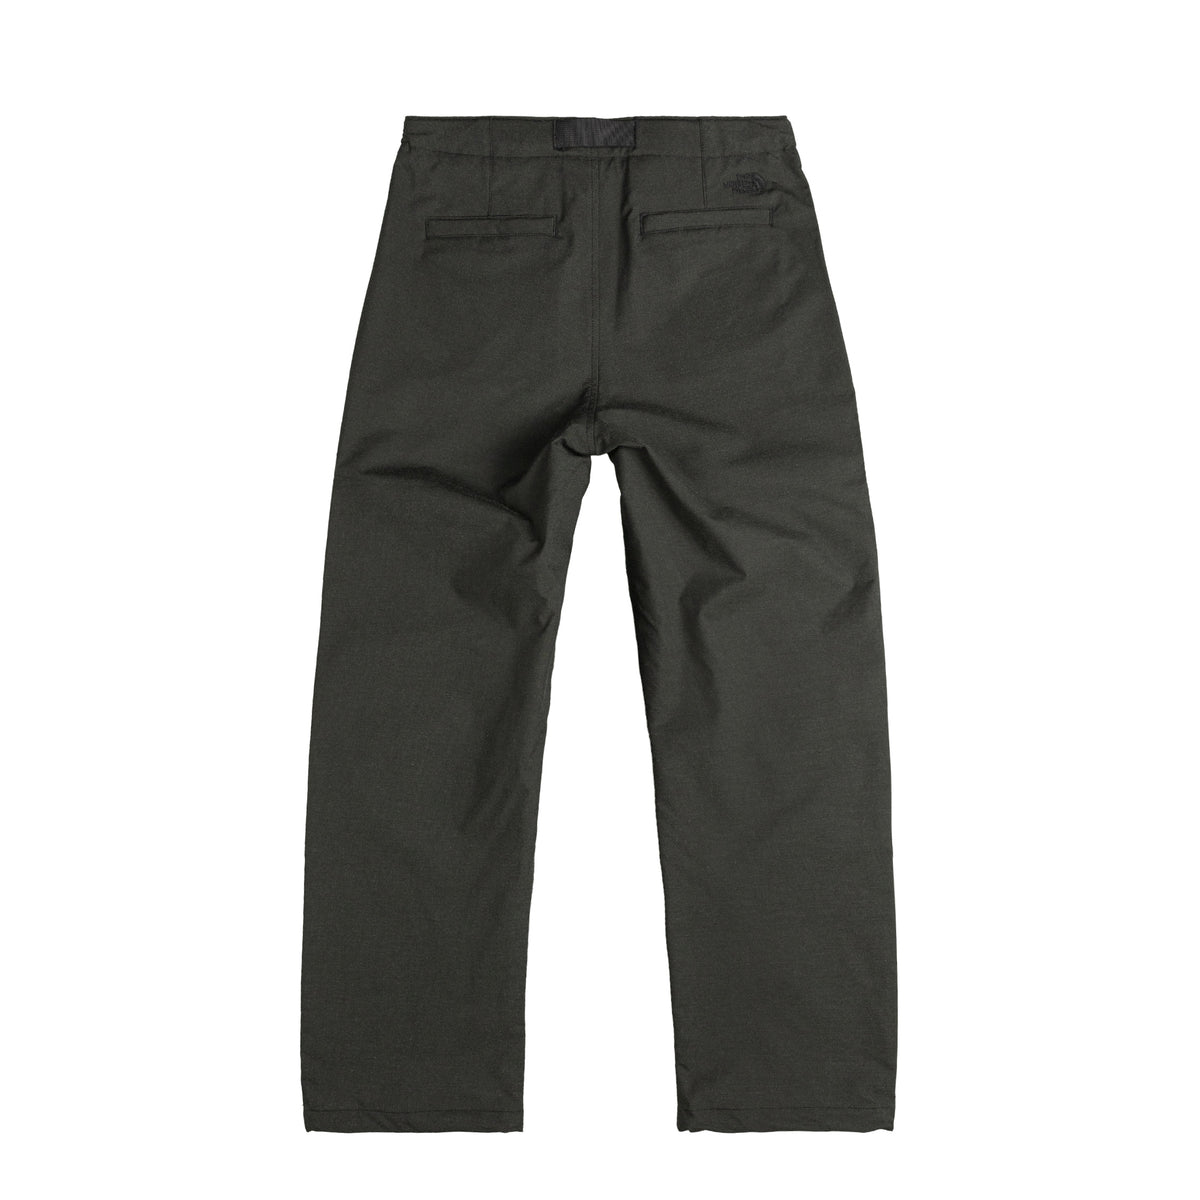 M66 tek twill wide leg pants - TNF black – D-STRUCTURE